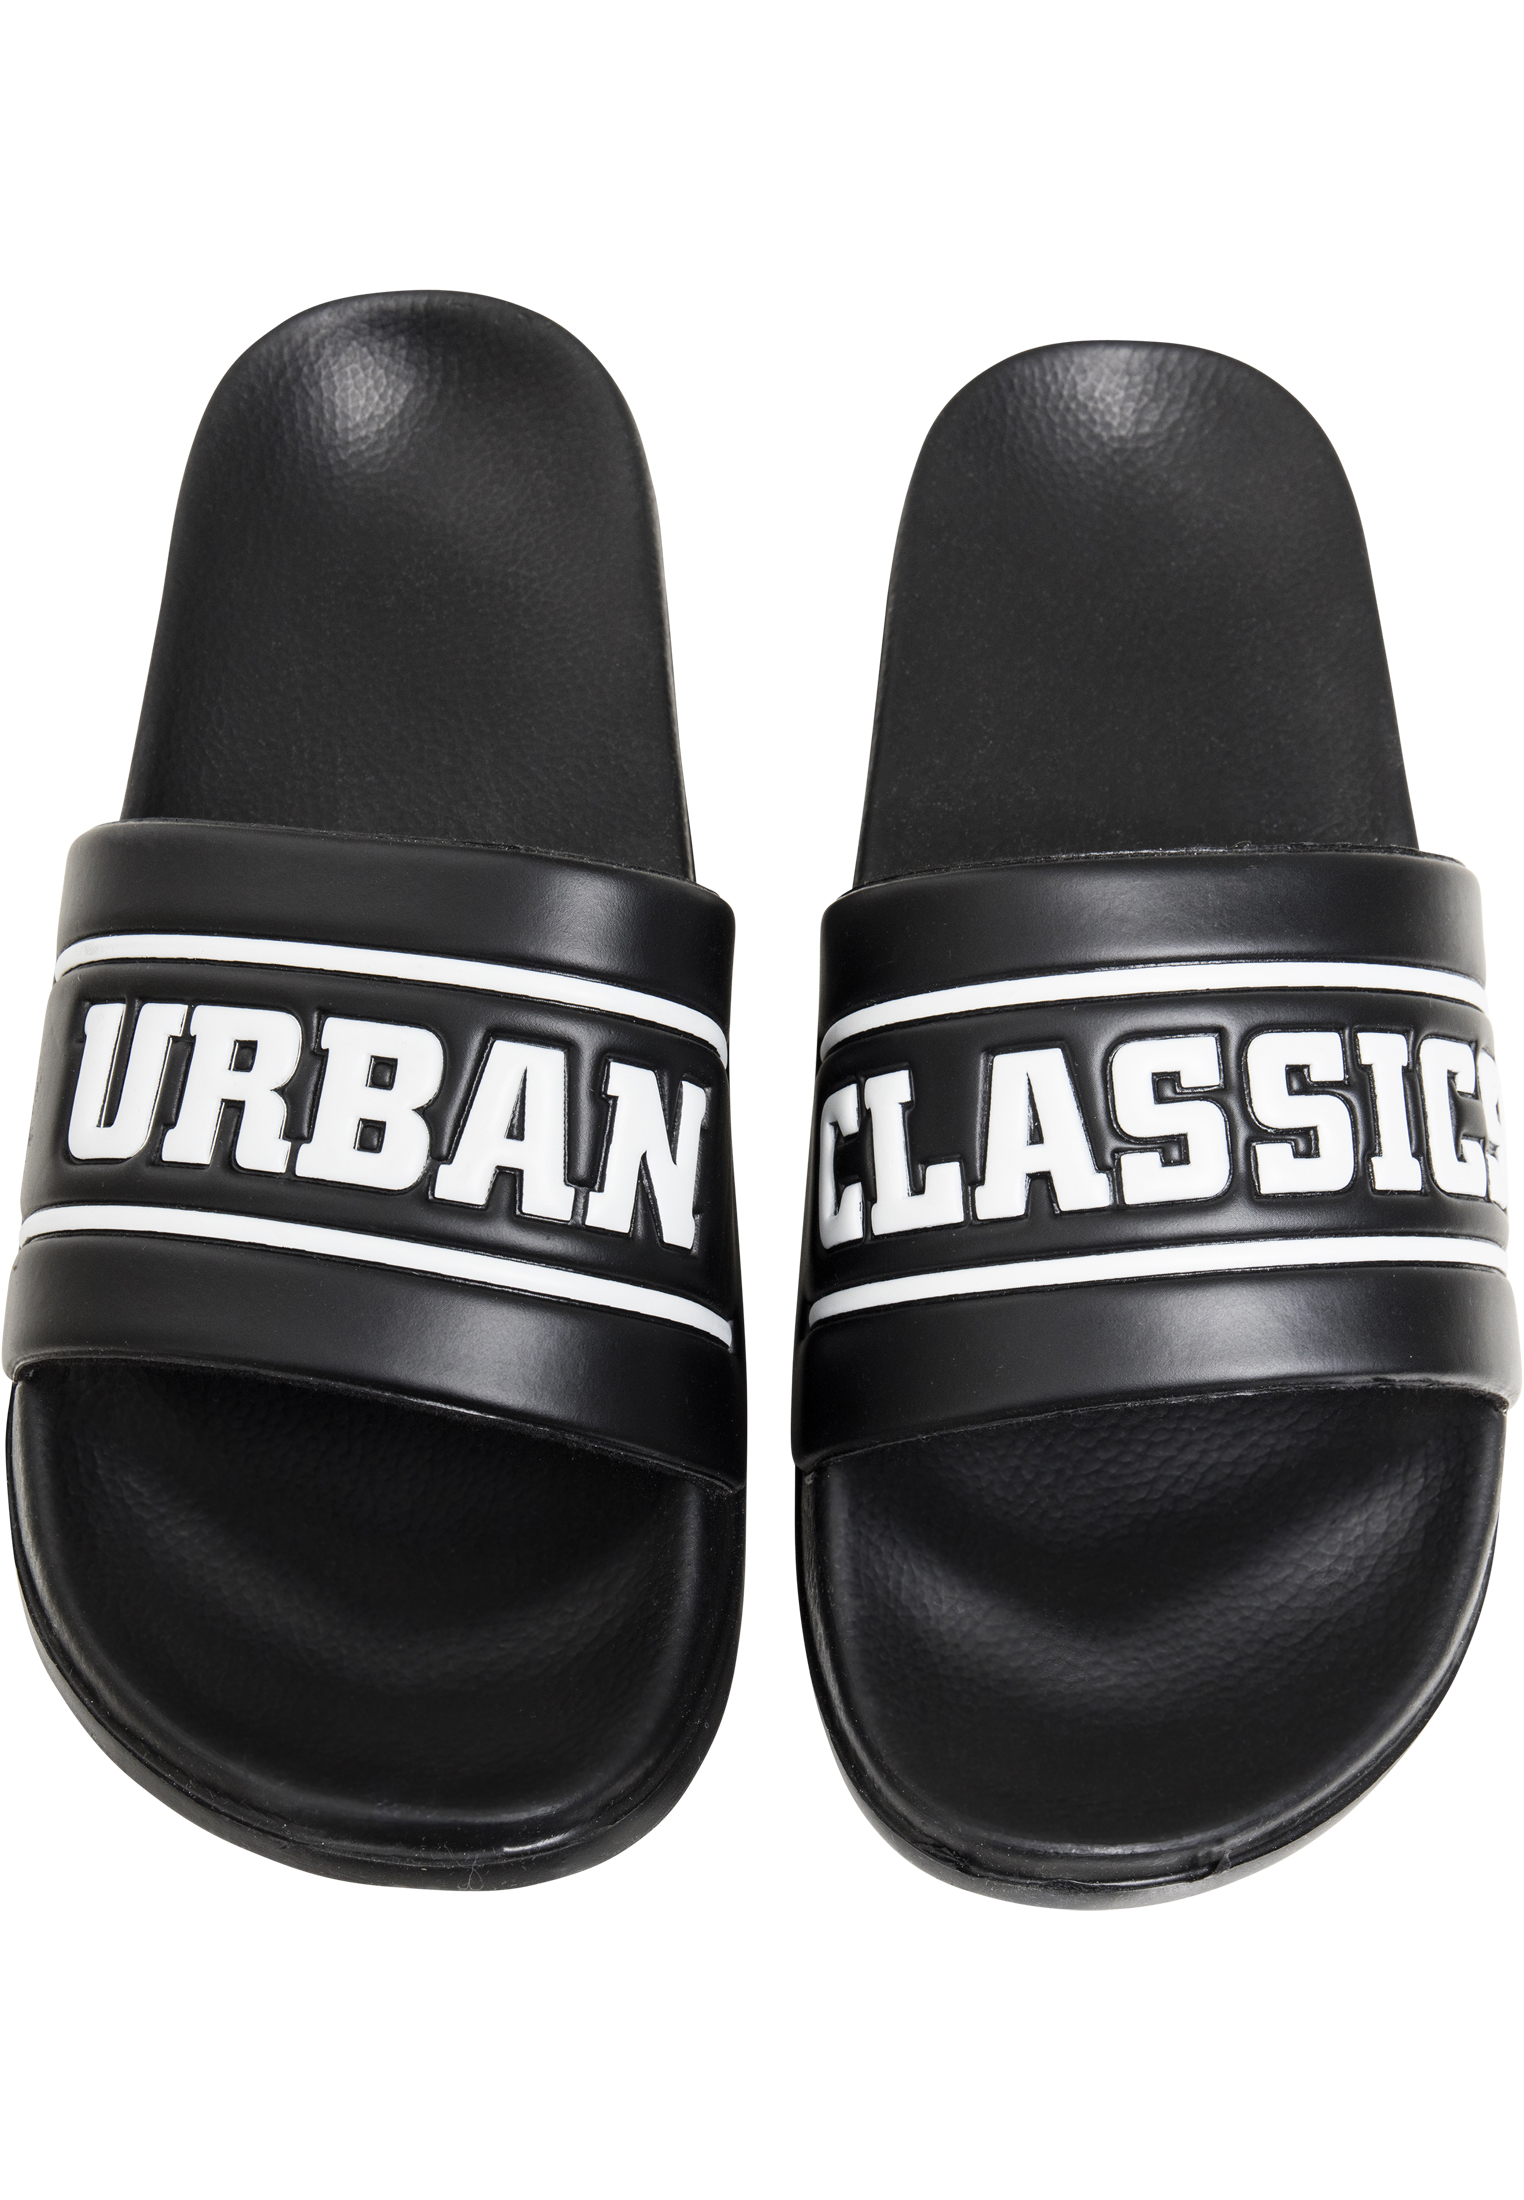 Schuhe UC Slides in Farbe black